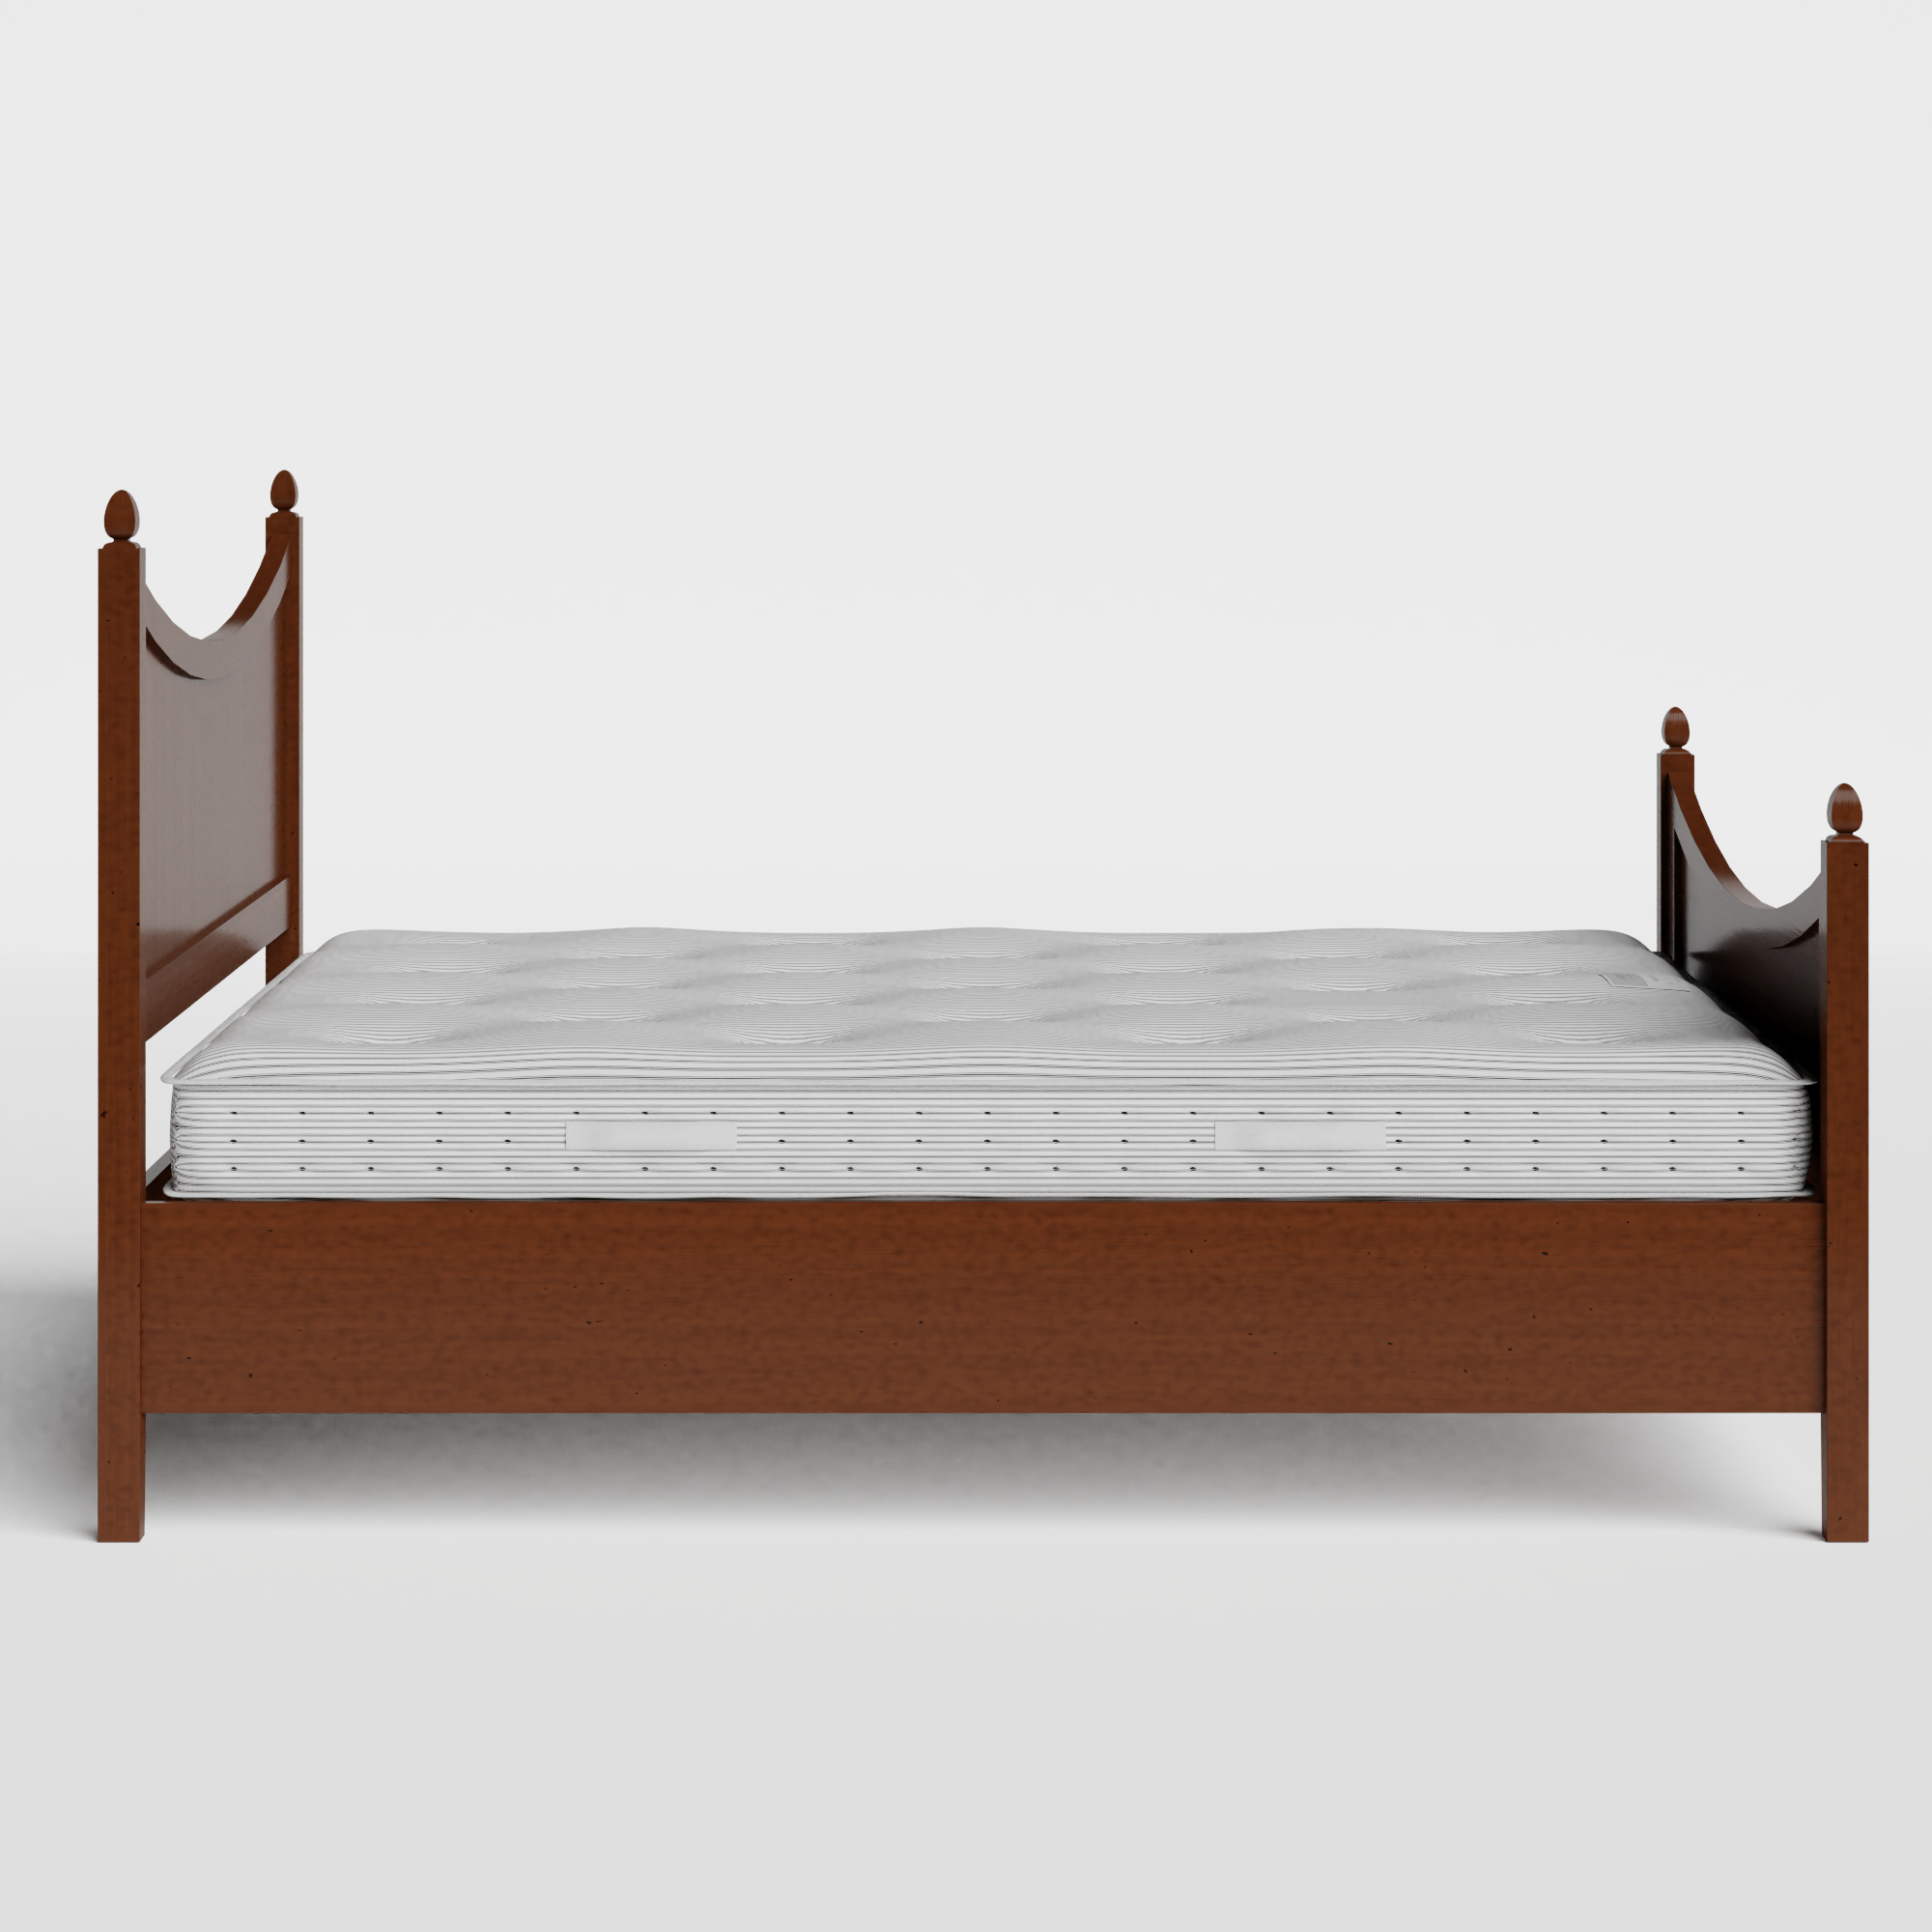 Blake wood bed in dark cherry with Juno mattress